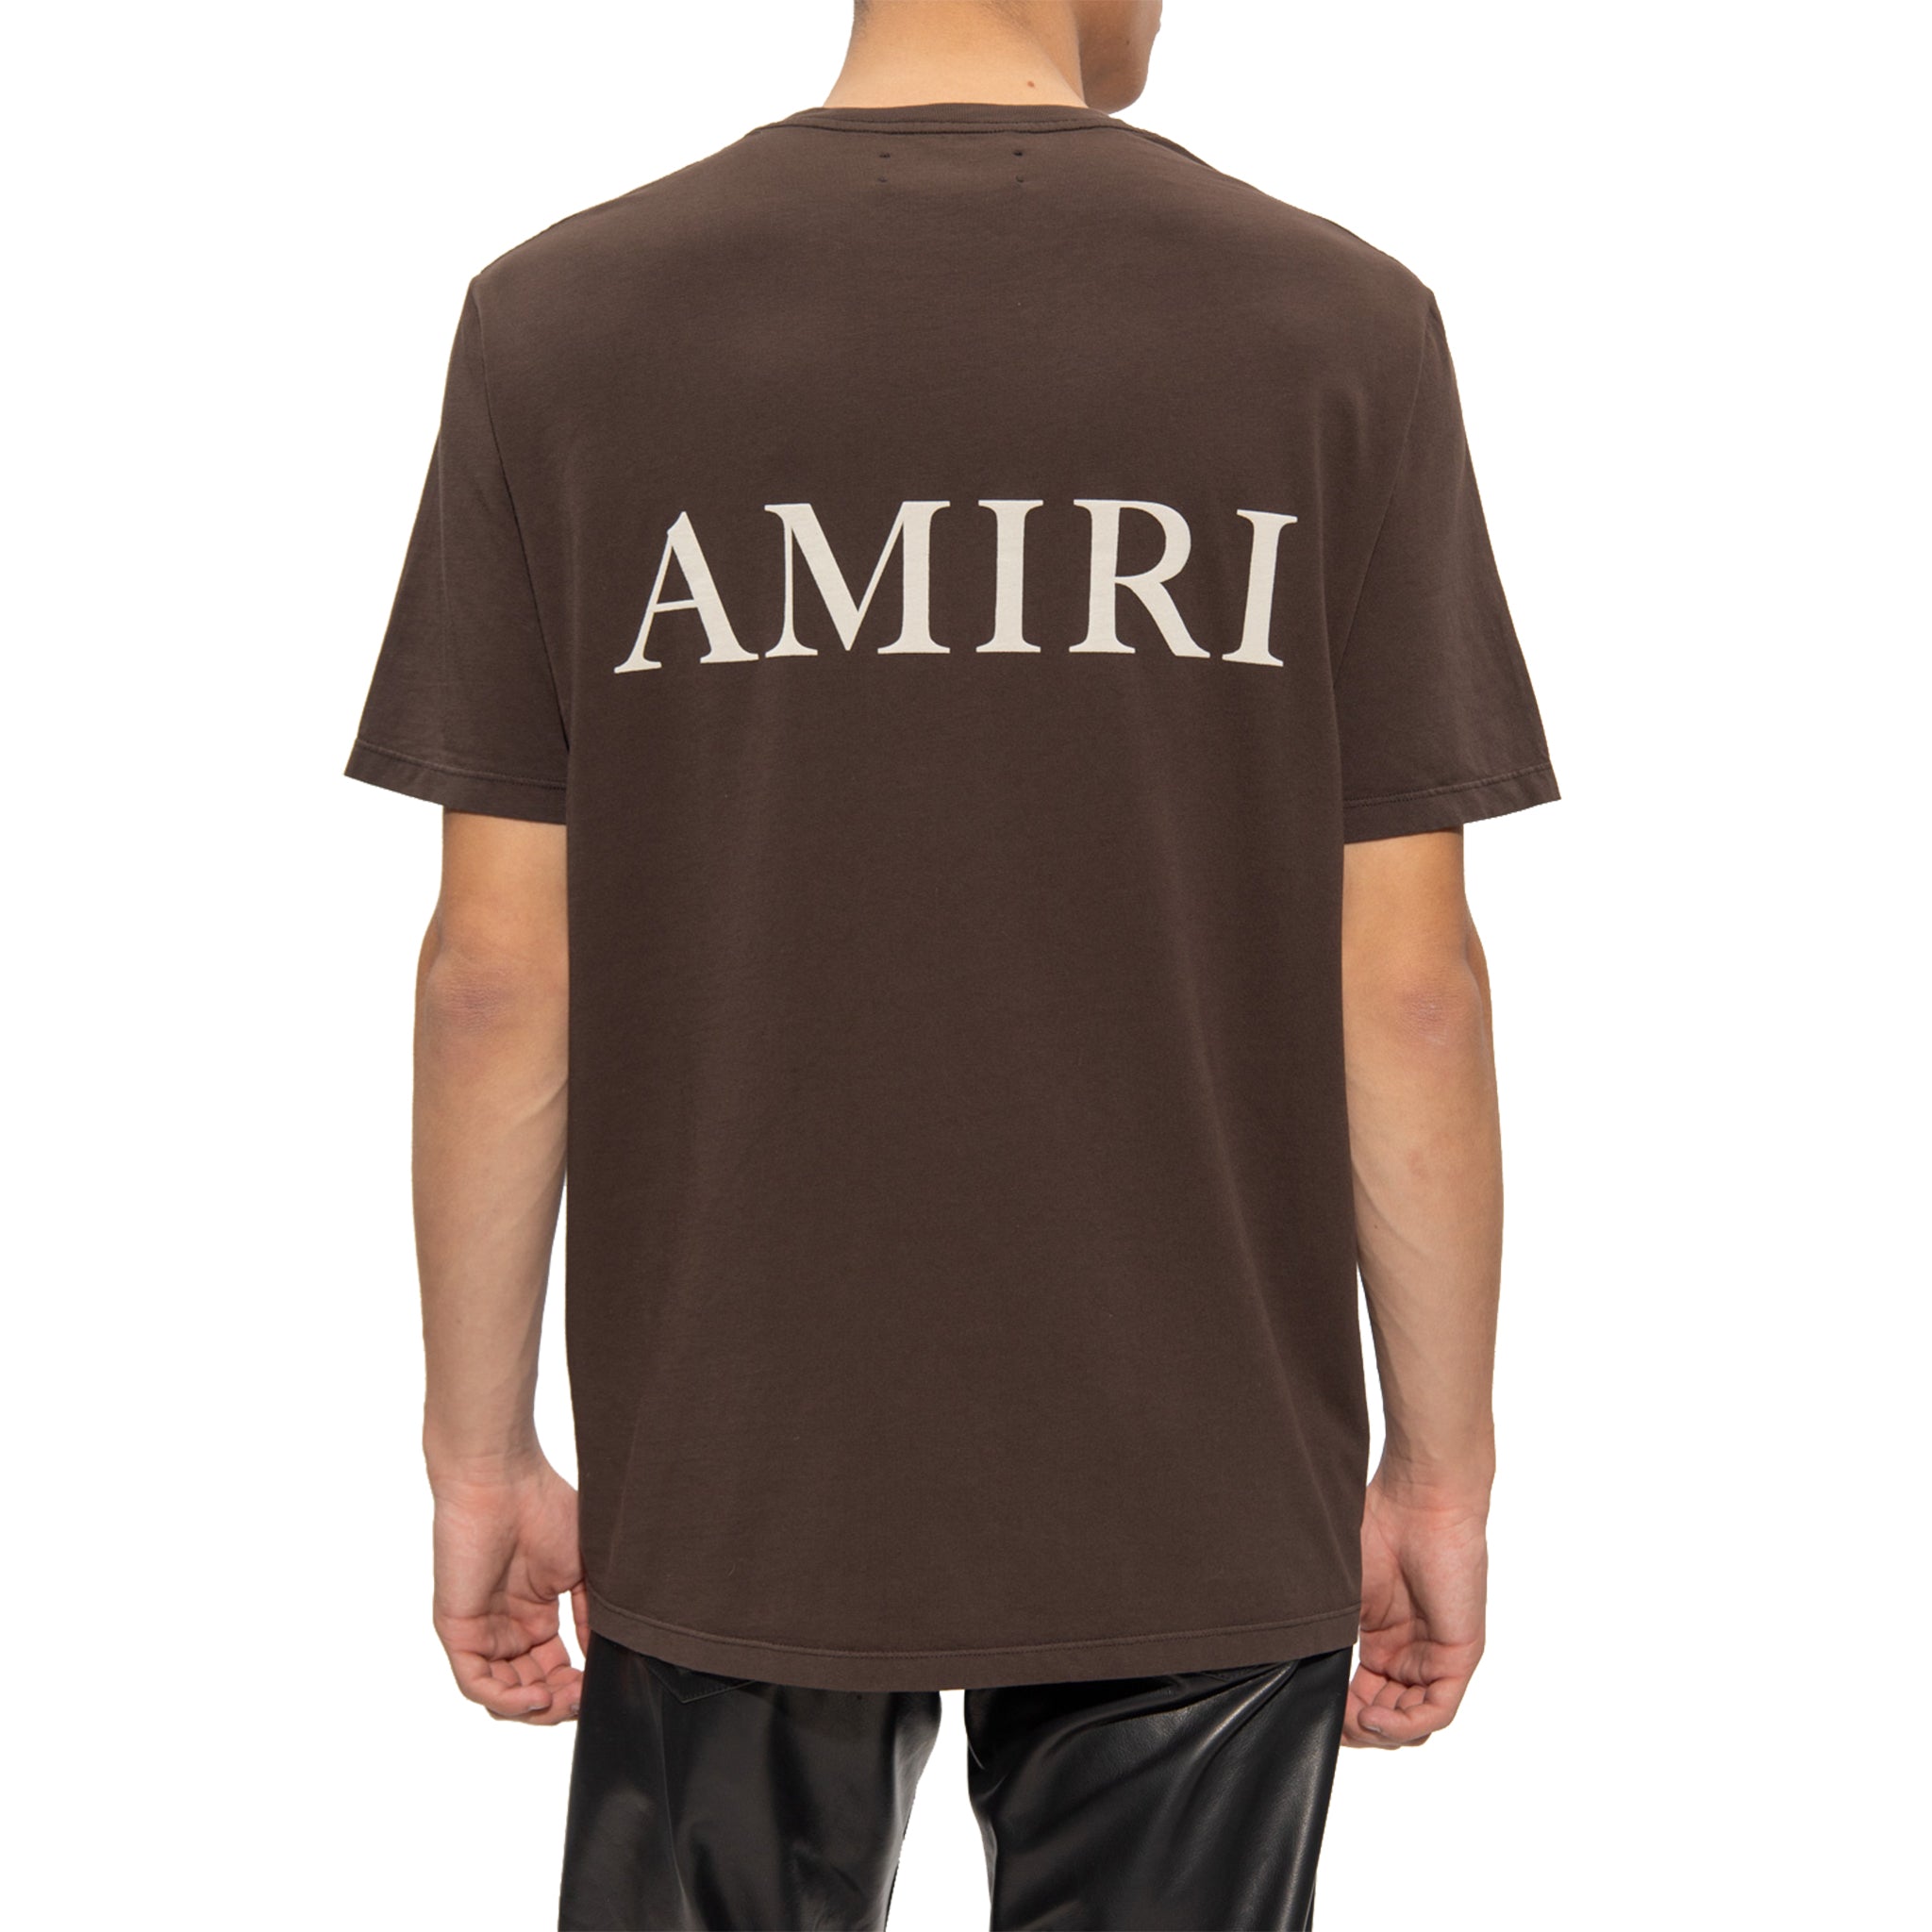 Back Model view of Amiri Puff Logo T Shirt Brown AW22MJL010-210